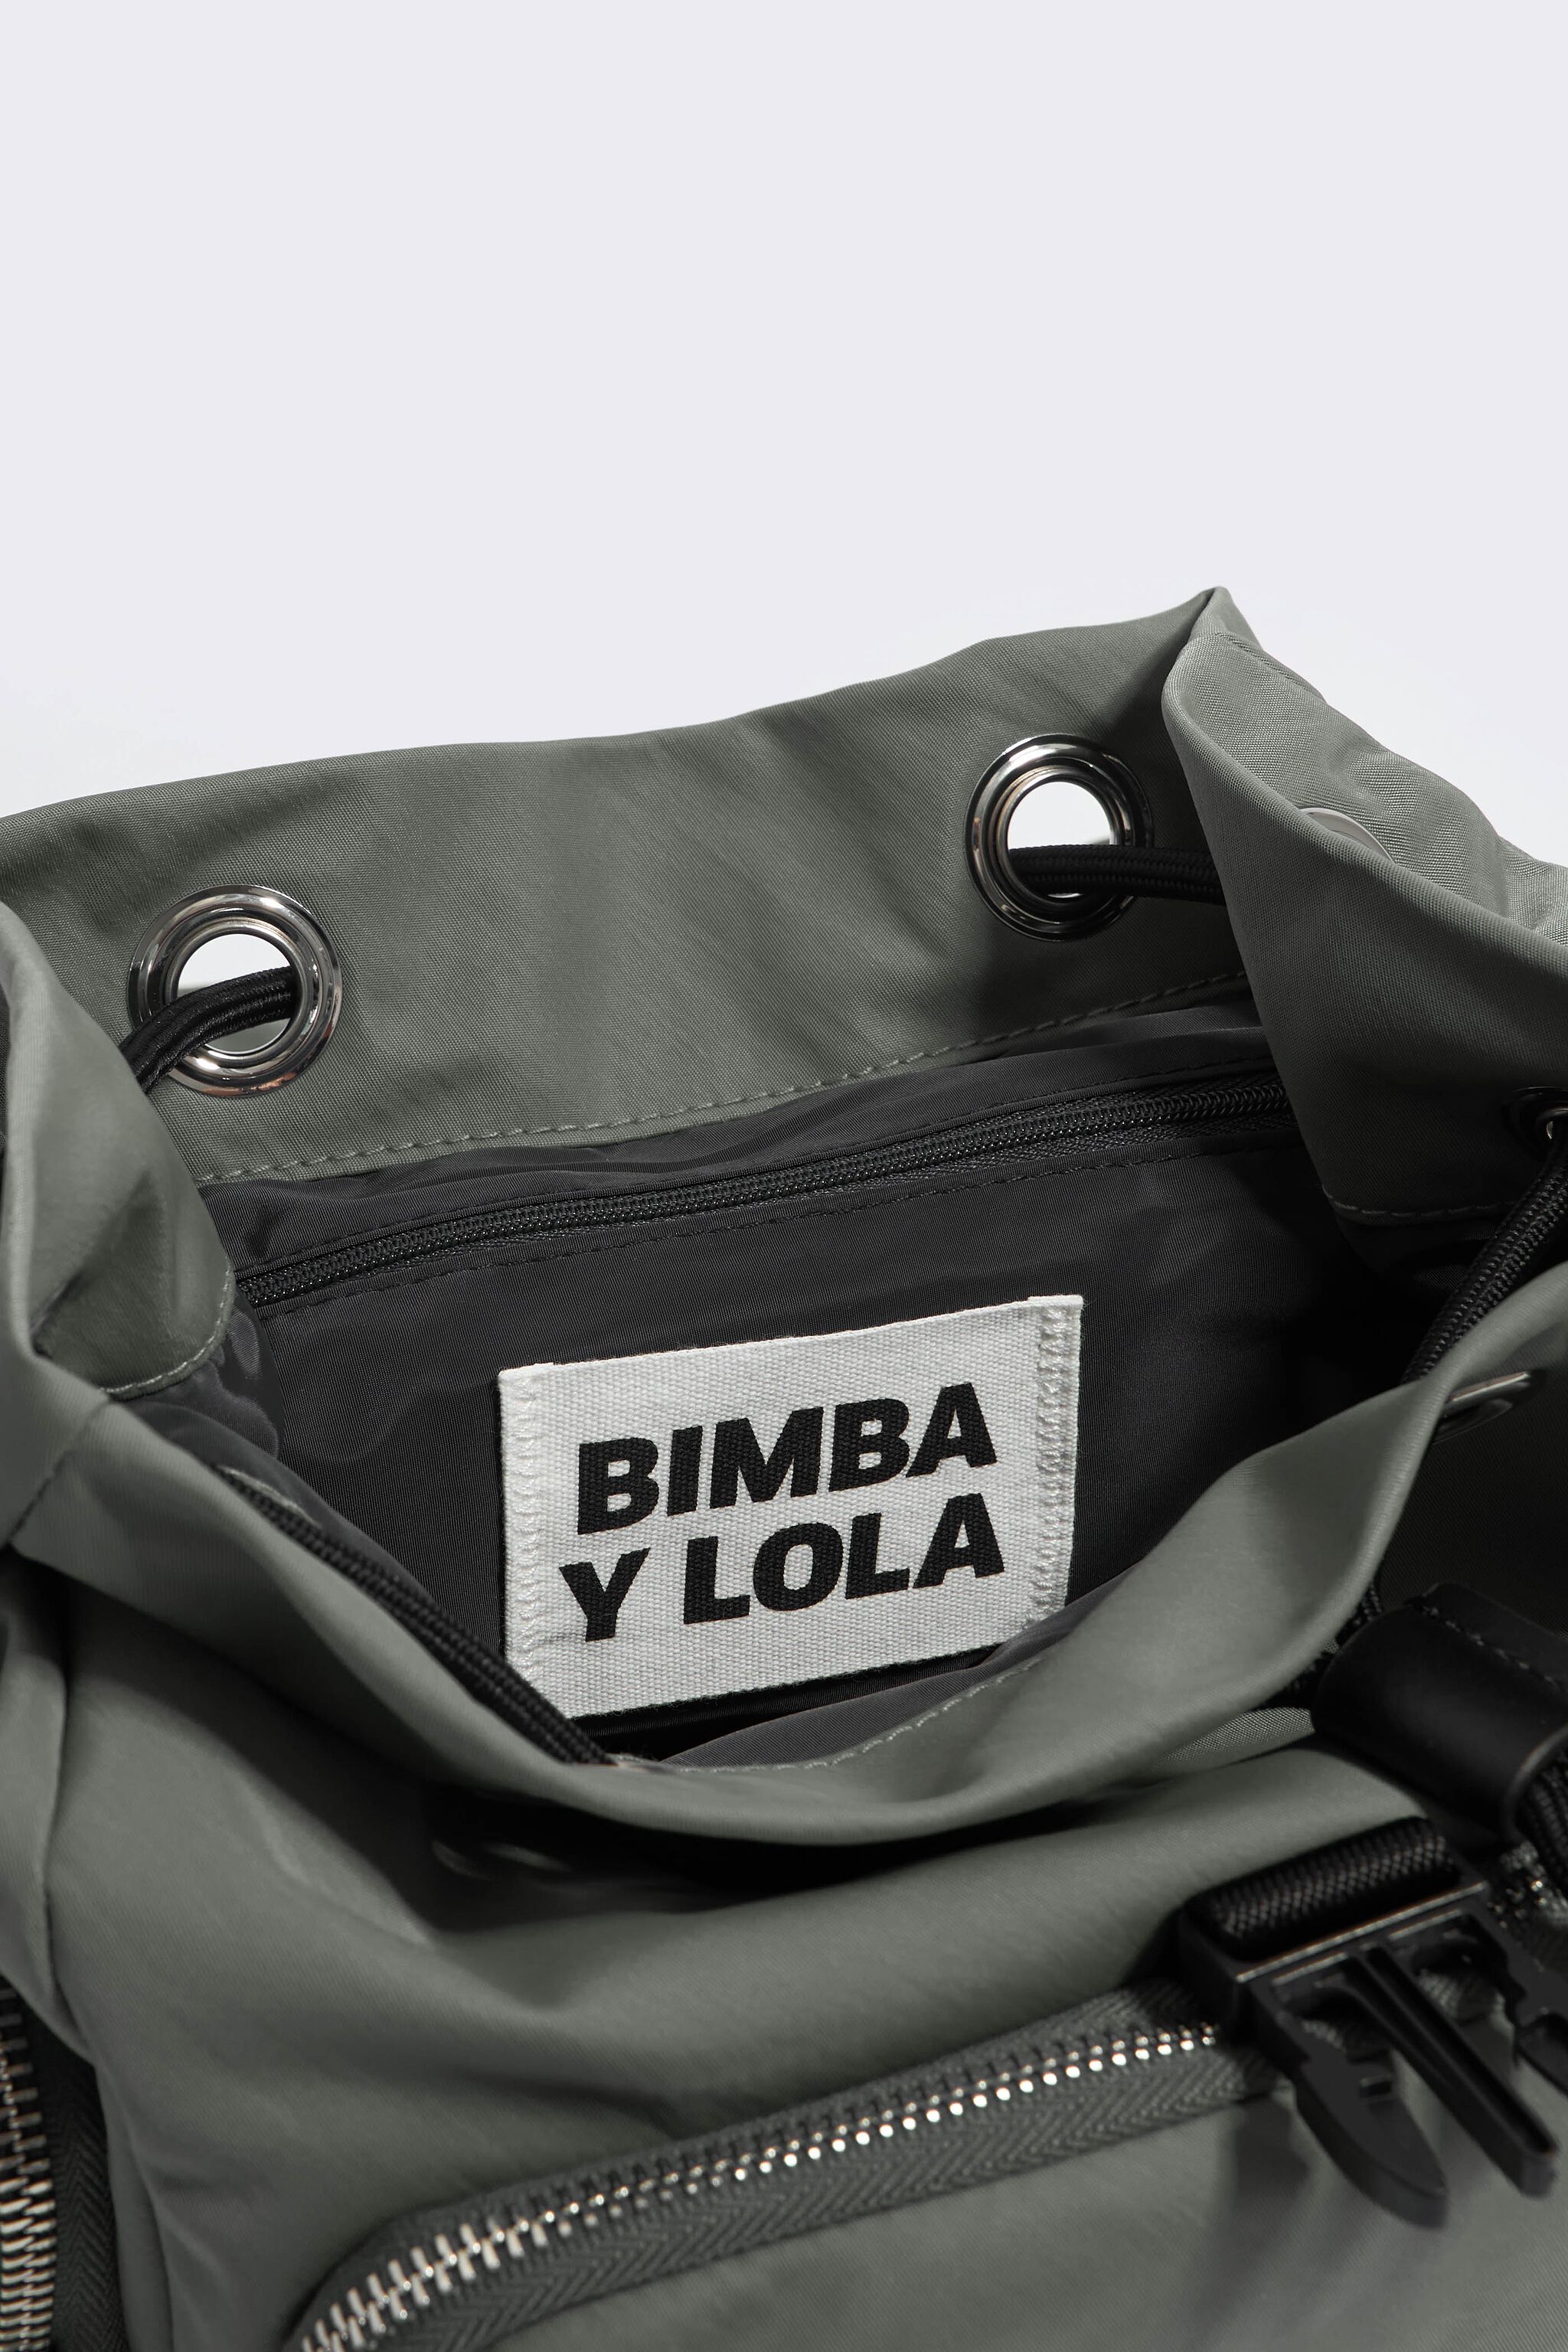 Bimba y Lola Bags - 162 products | FASHIOLA.ph